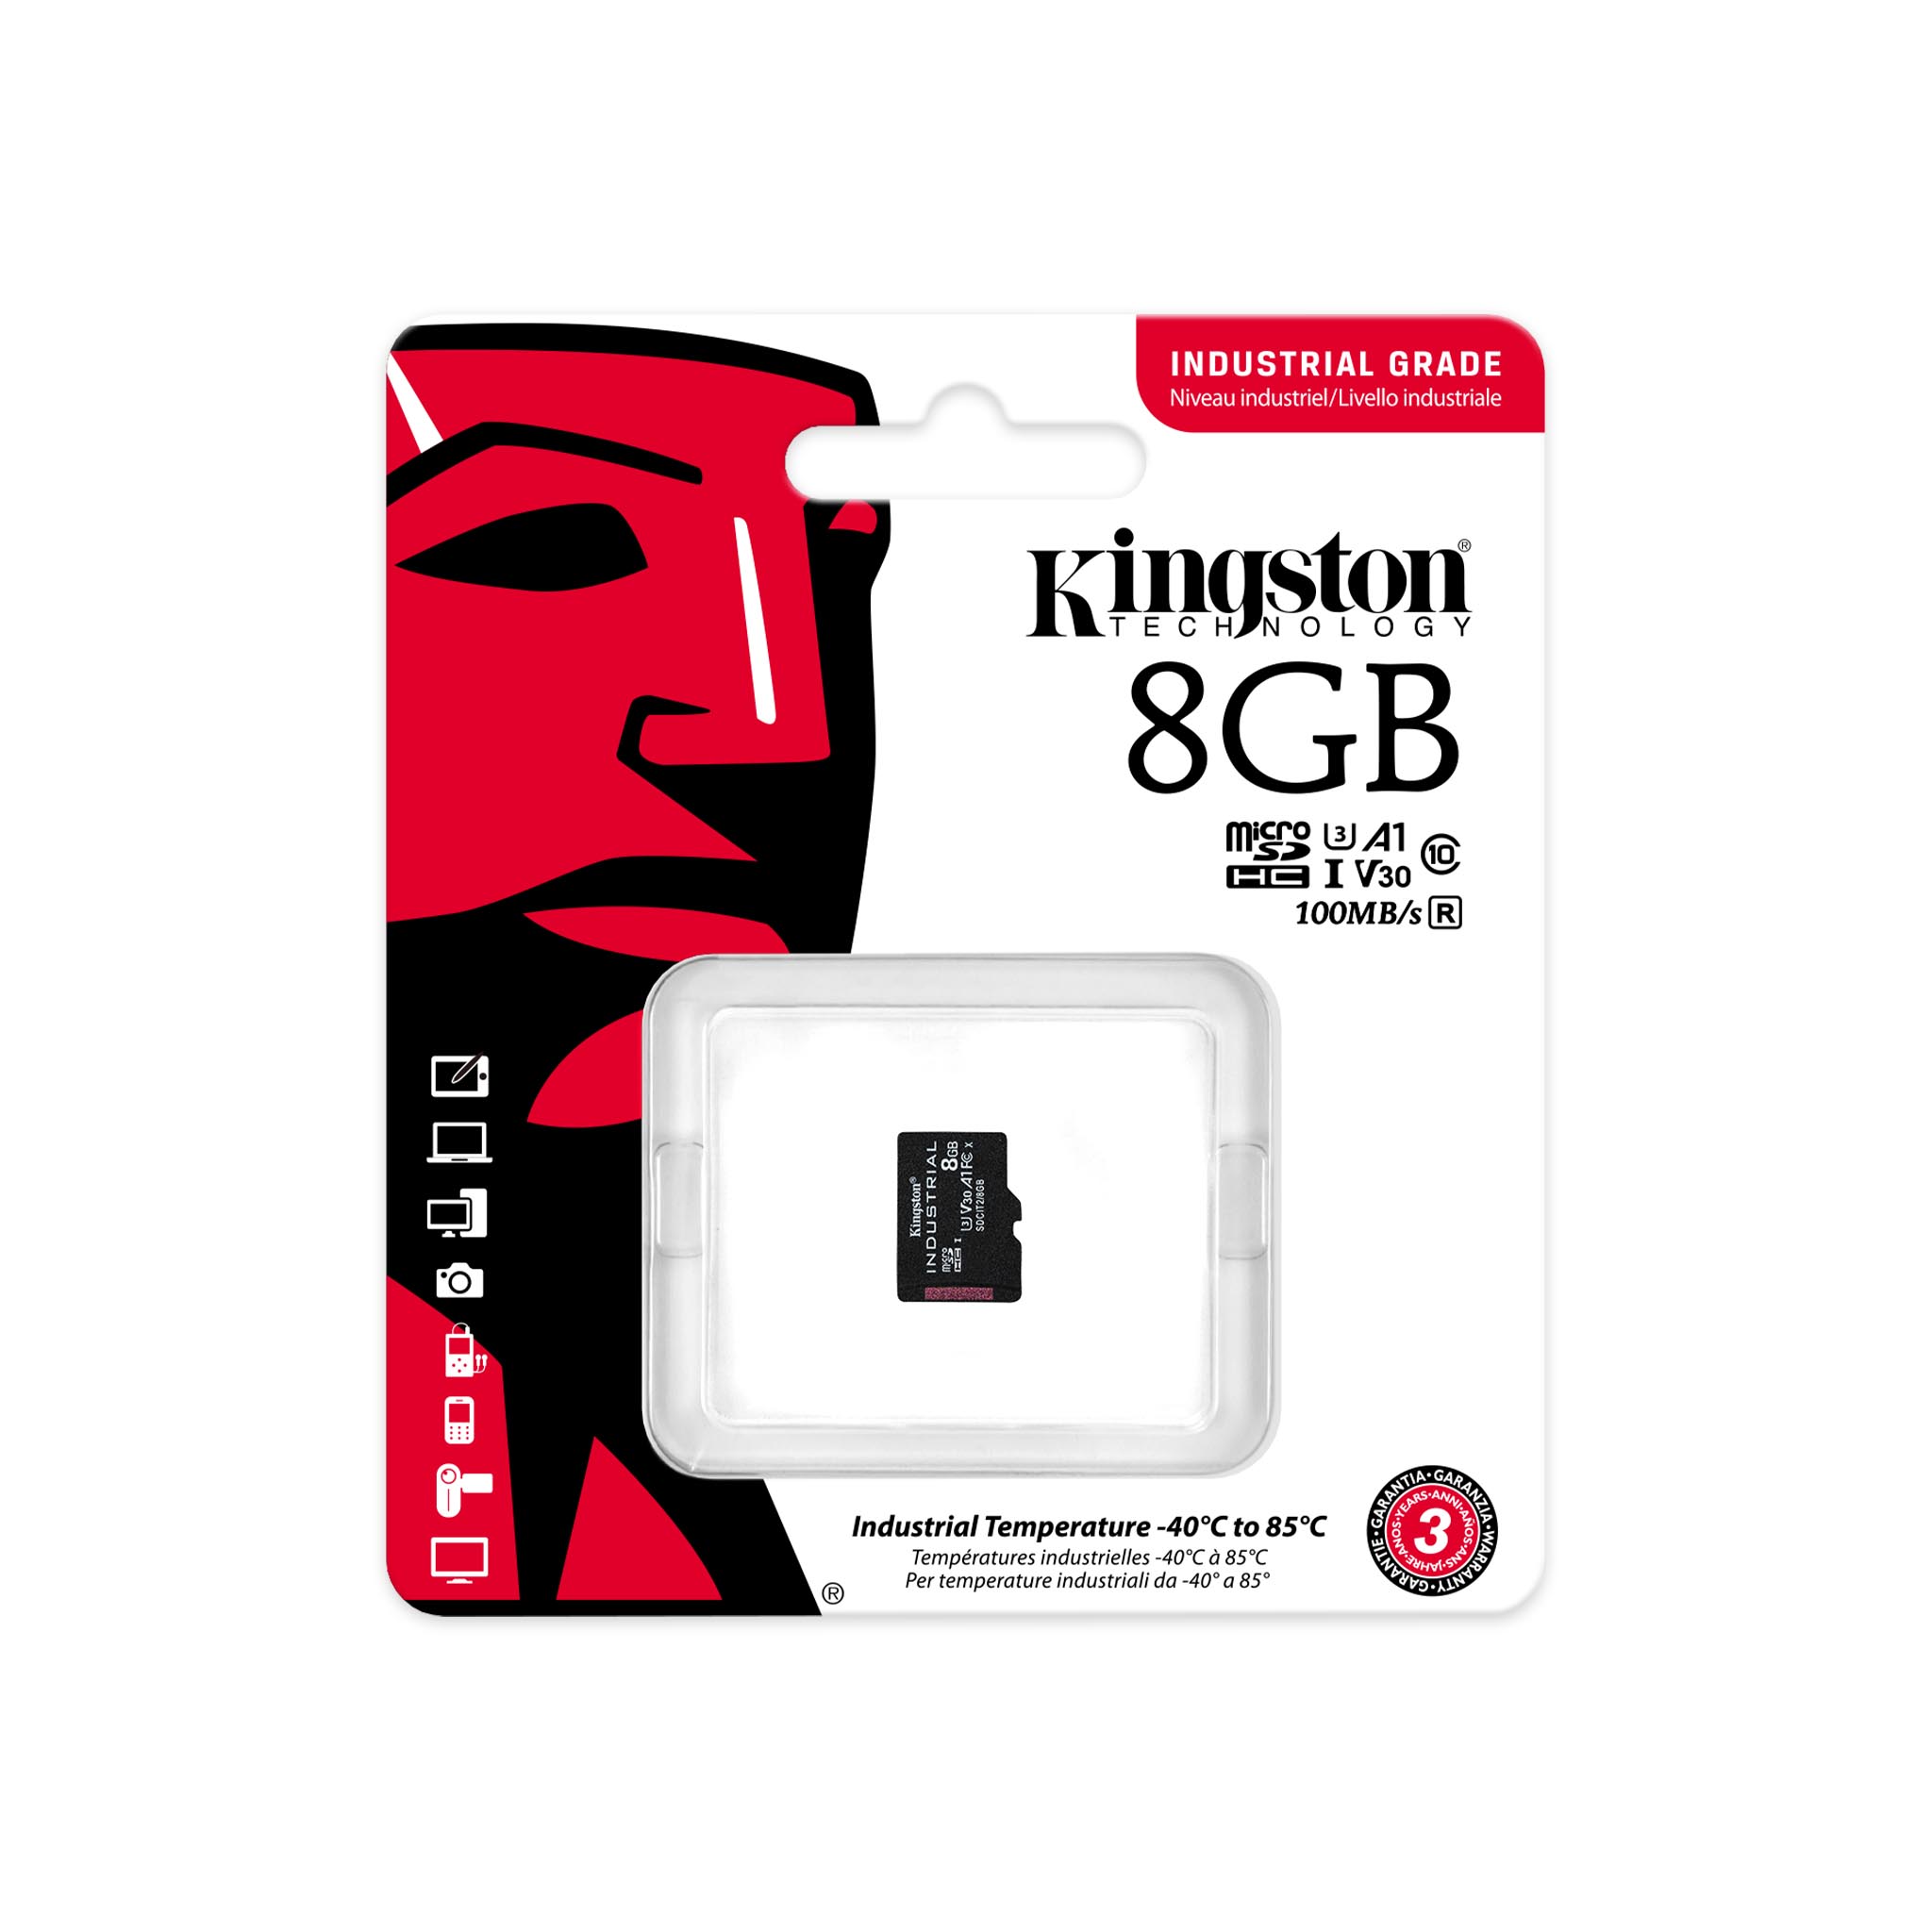 Kingston Industrial Grade 8GB LG G Vista MicroSDHC Card Verified by SanFlash. 90MBs Works for Kingston 